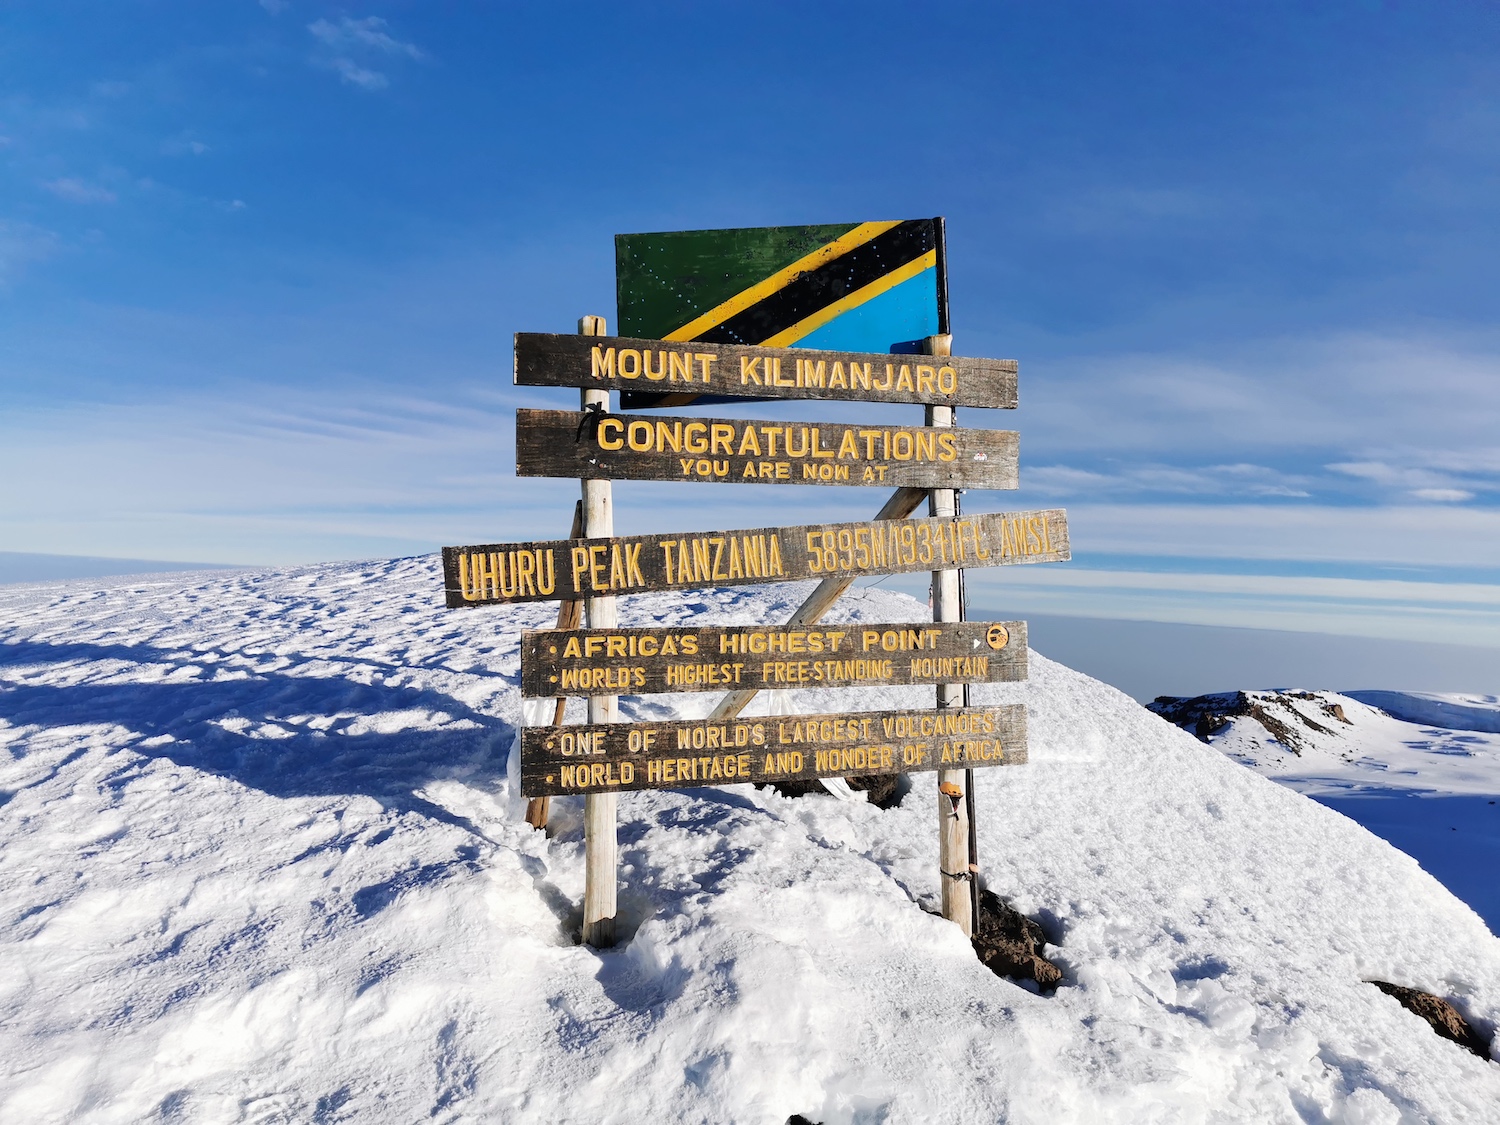 The Mount Kilimanjaro Group Climb